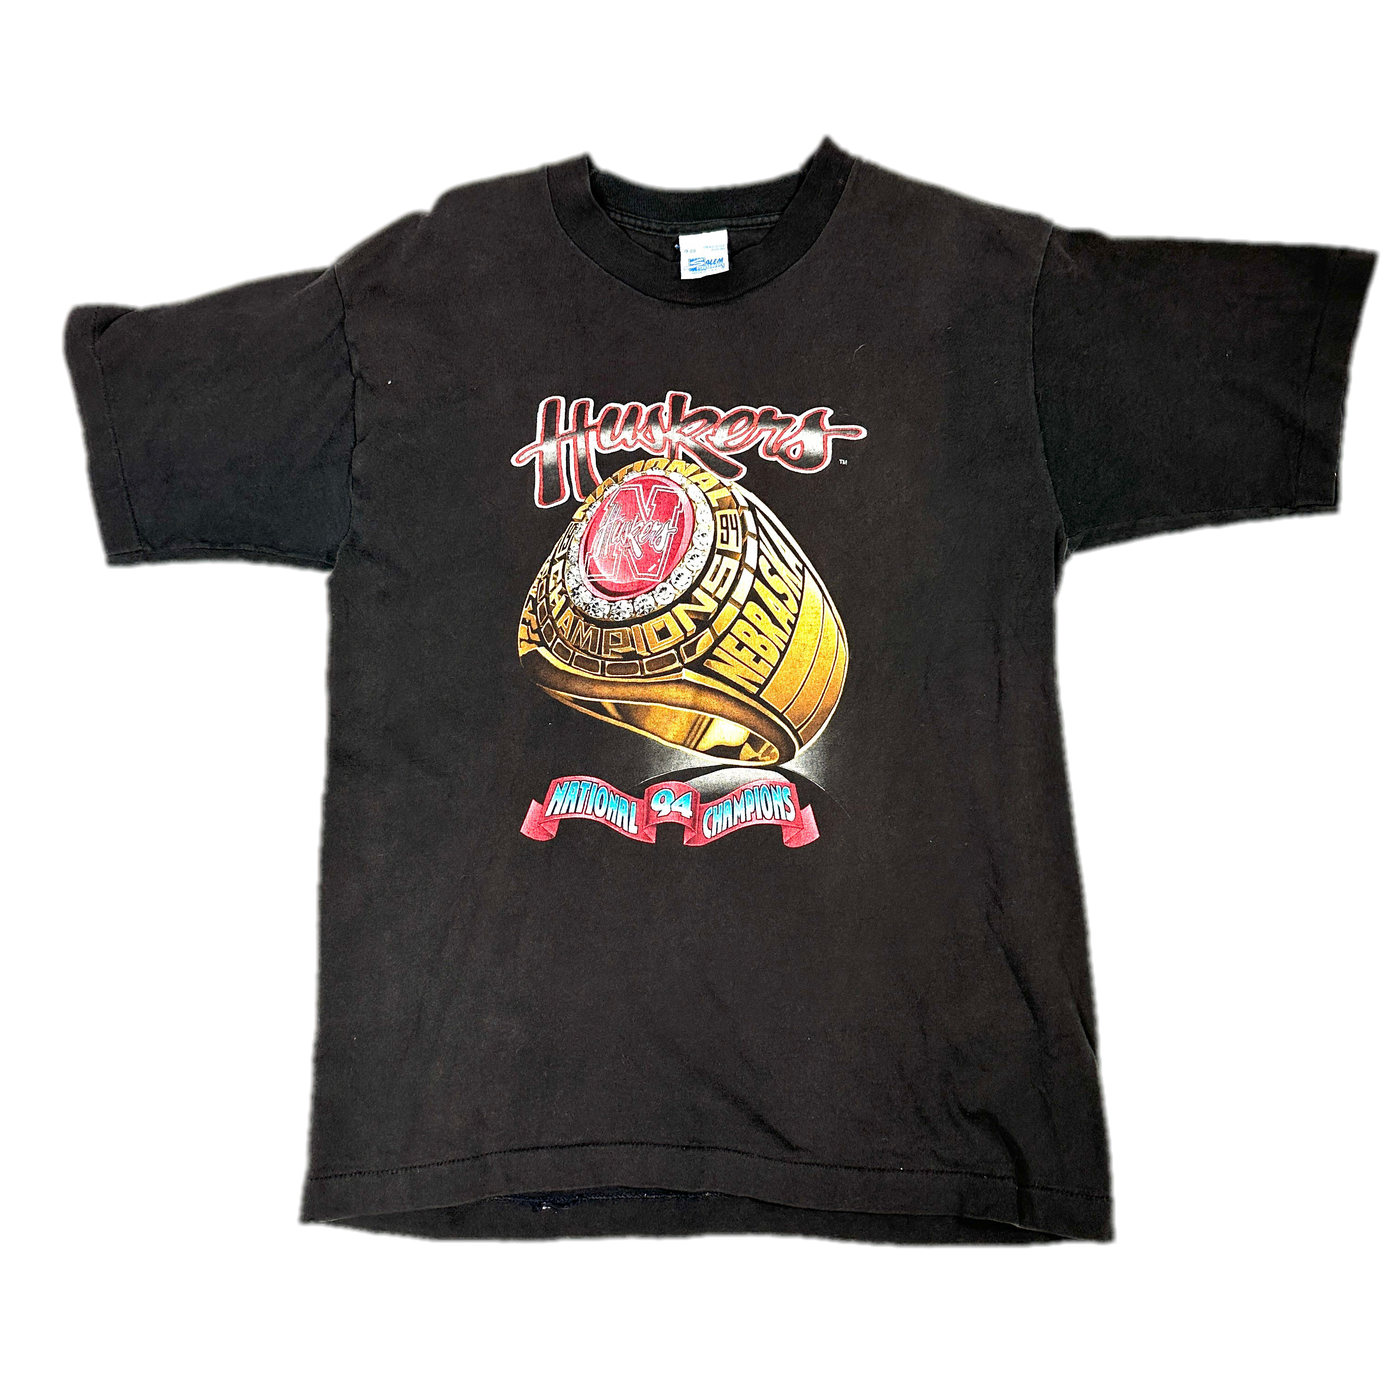 '94 Huskers National Champions Sports T-Shirt sz M